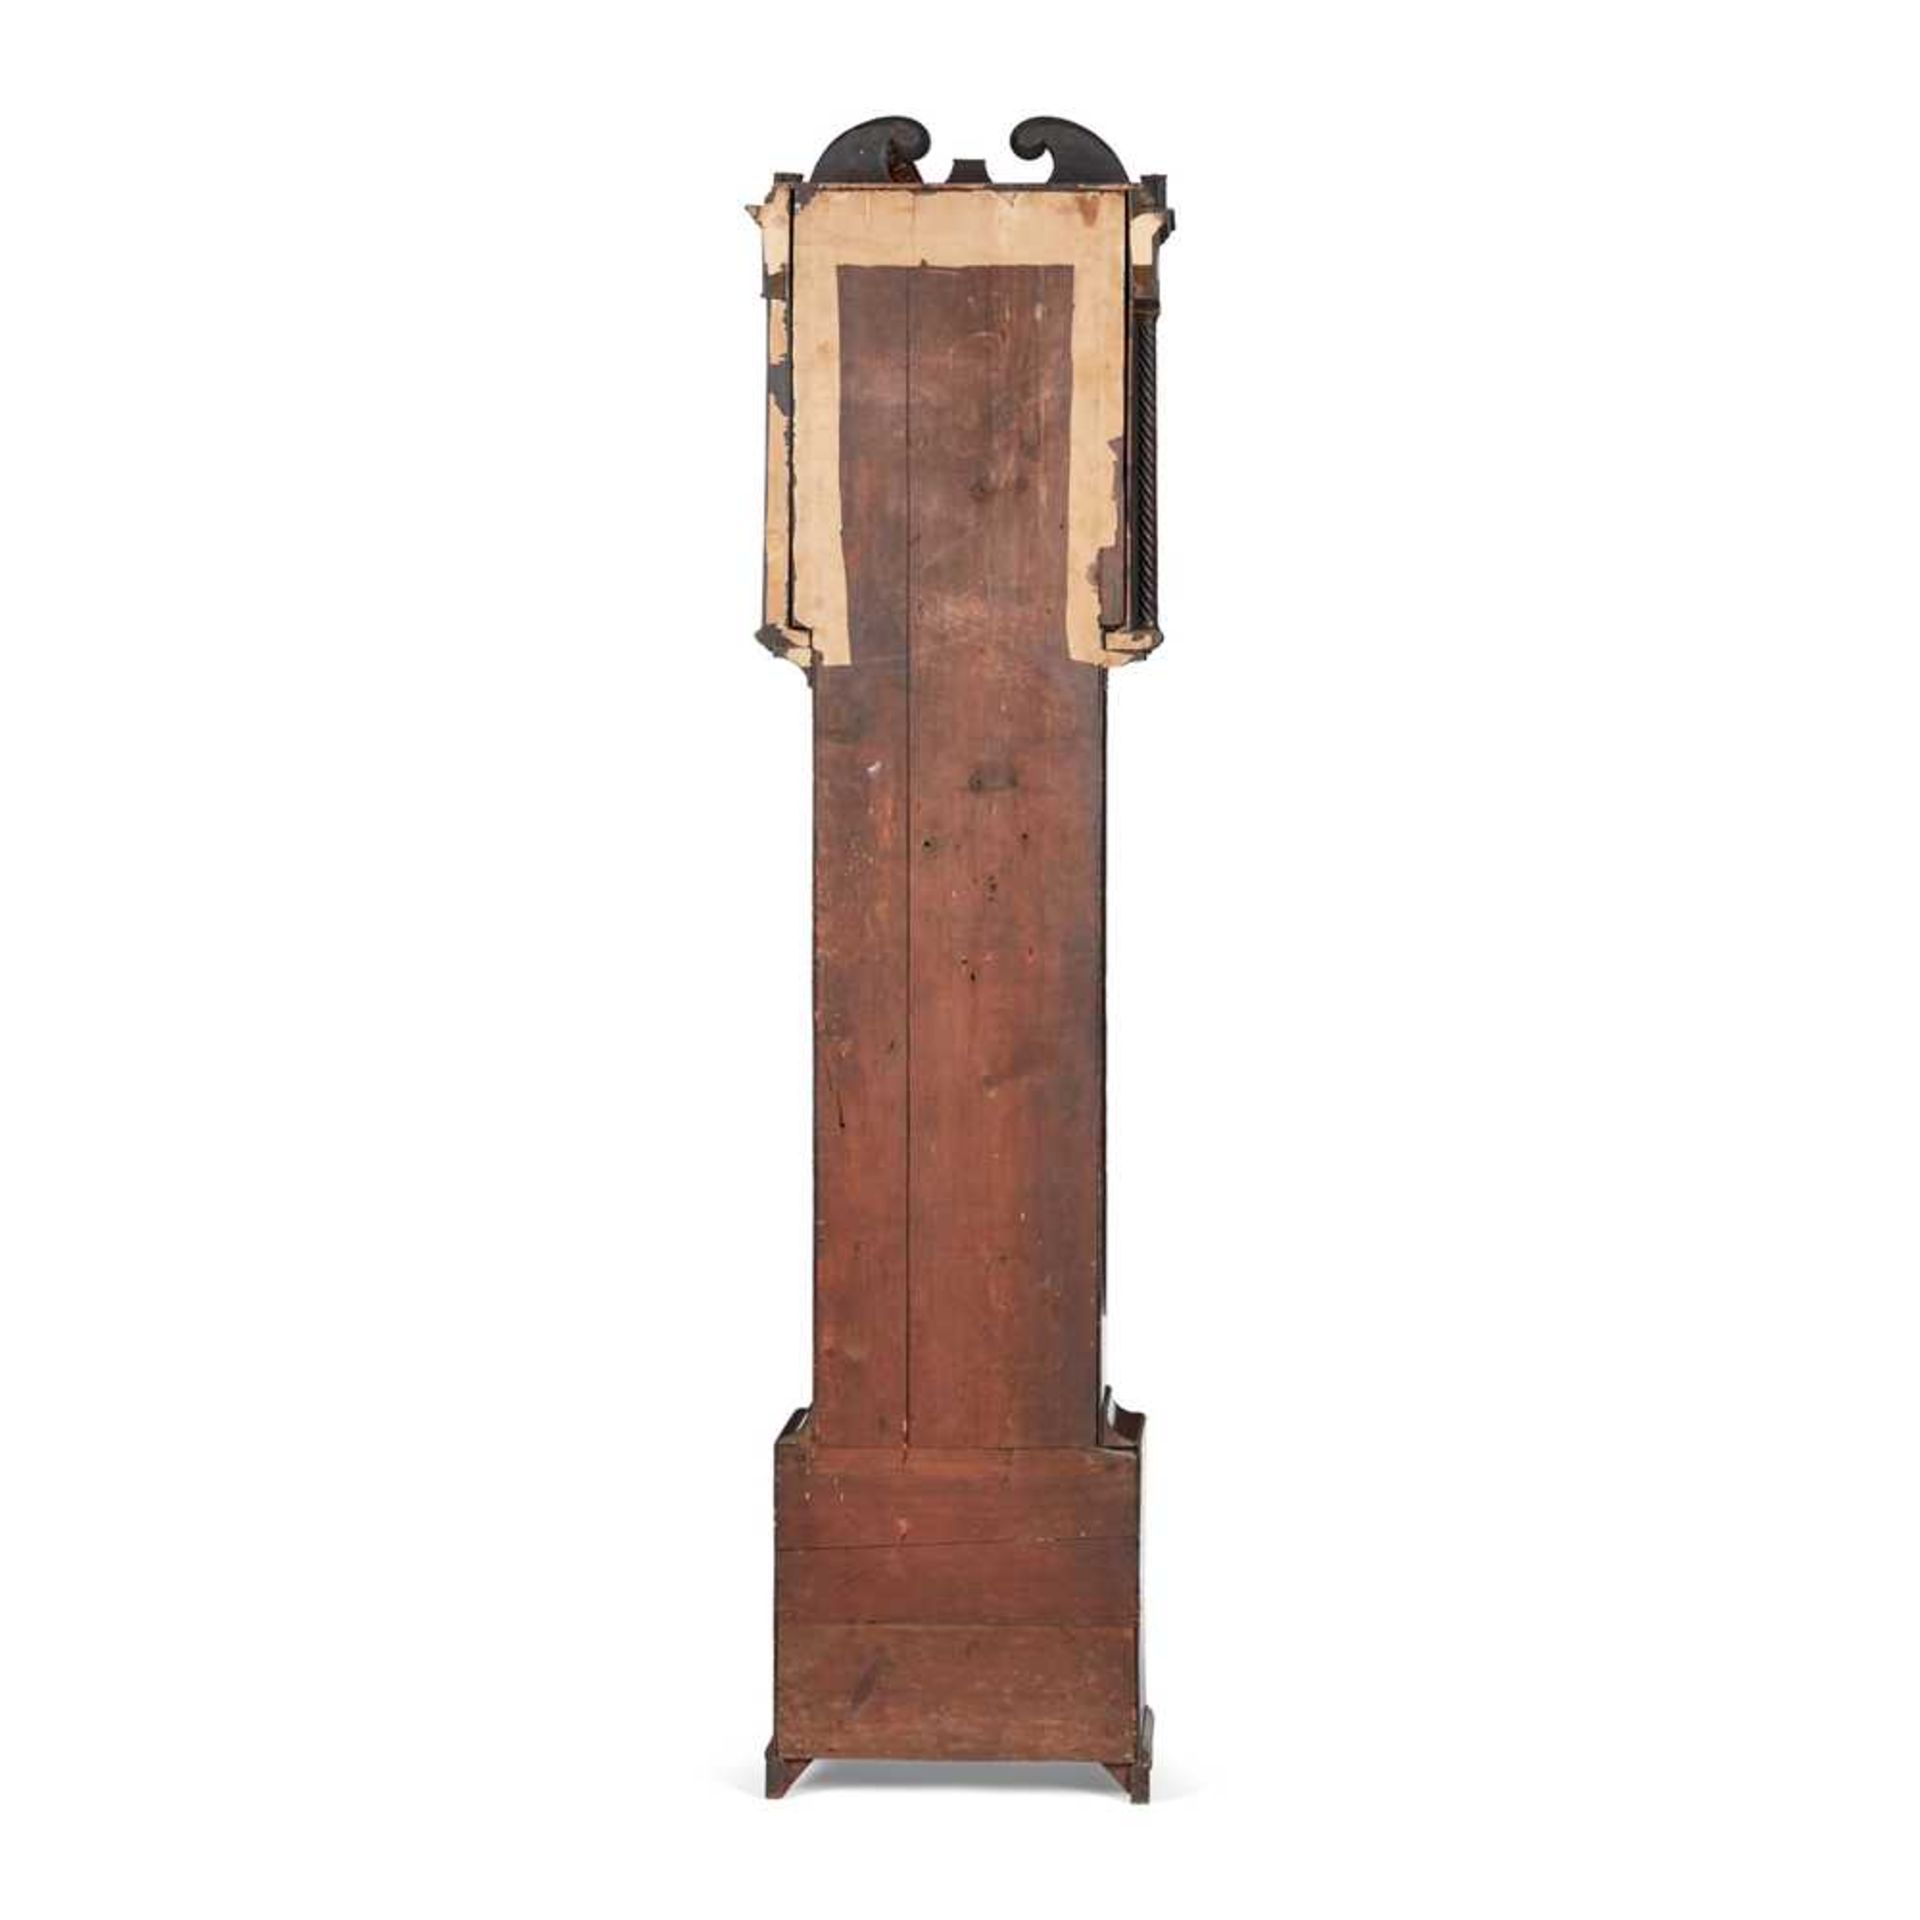 A SCOTTISH MAHOGANY MOONPHASE LONGCASE CLOCK, THOMAS STEWART, AUCHTERARDER EARLY 19TH CENTURY - Image 3 of 3